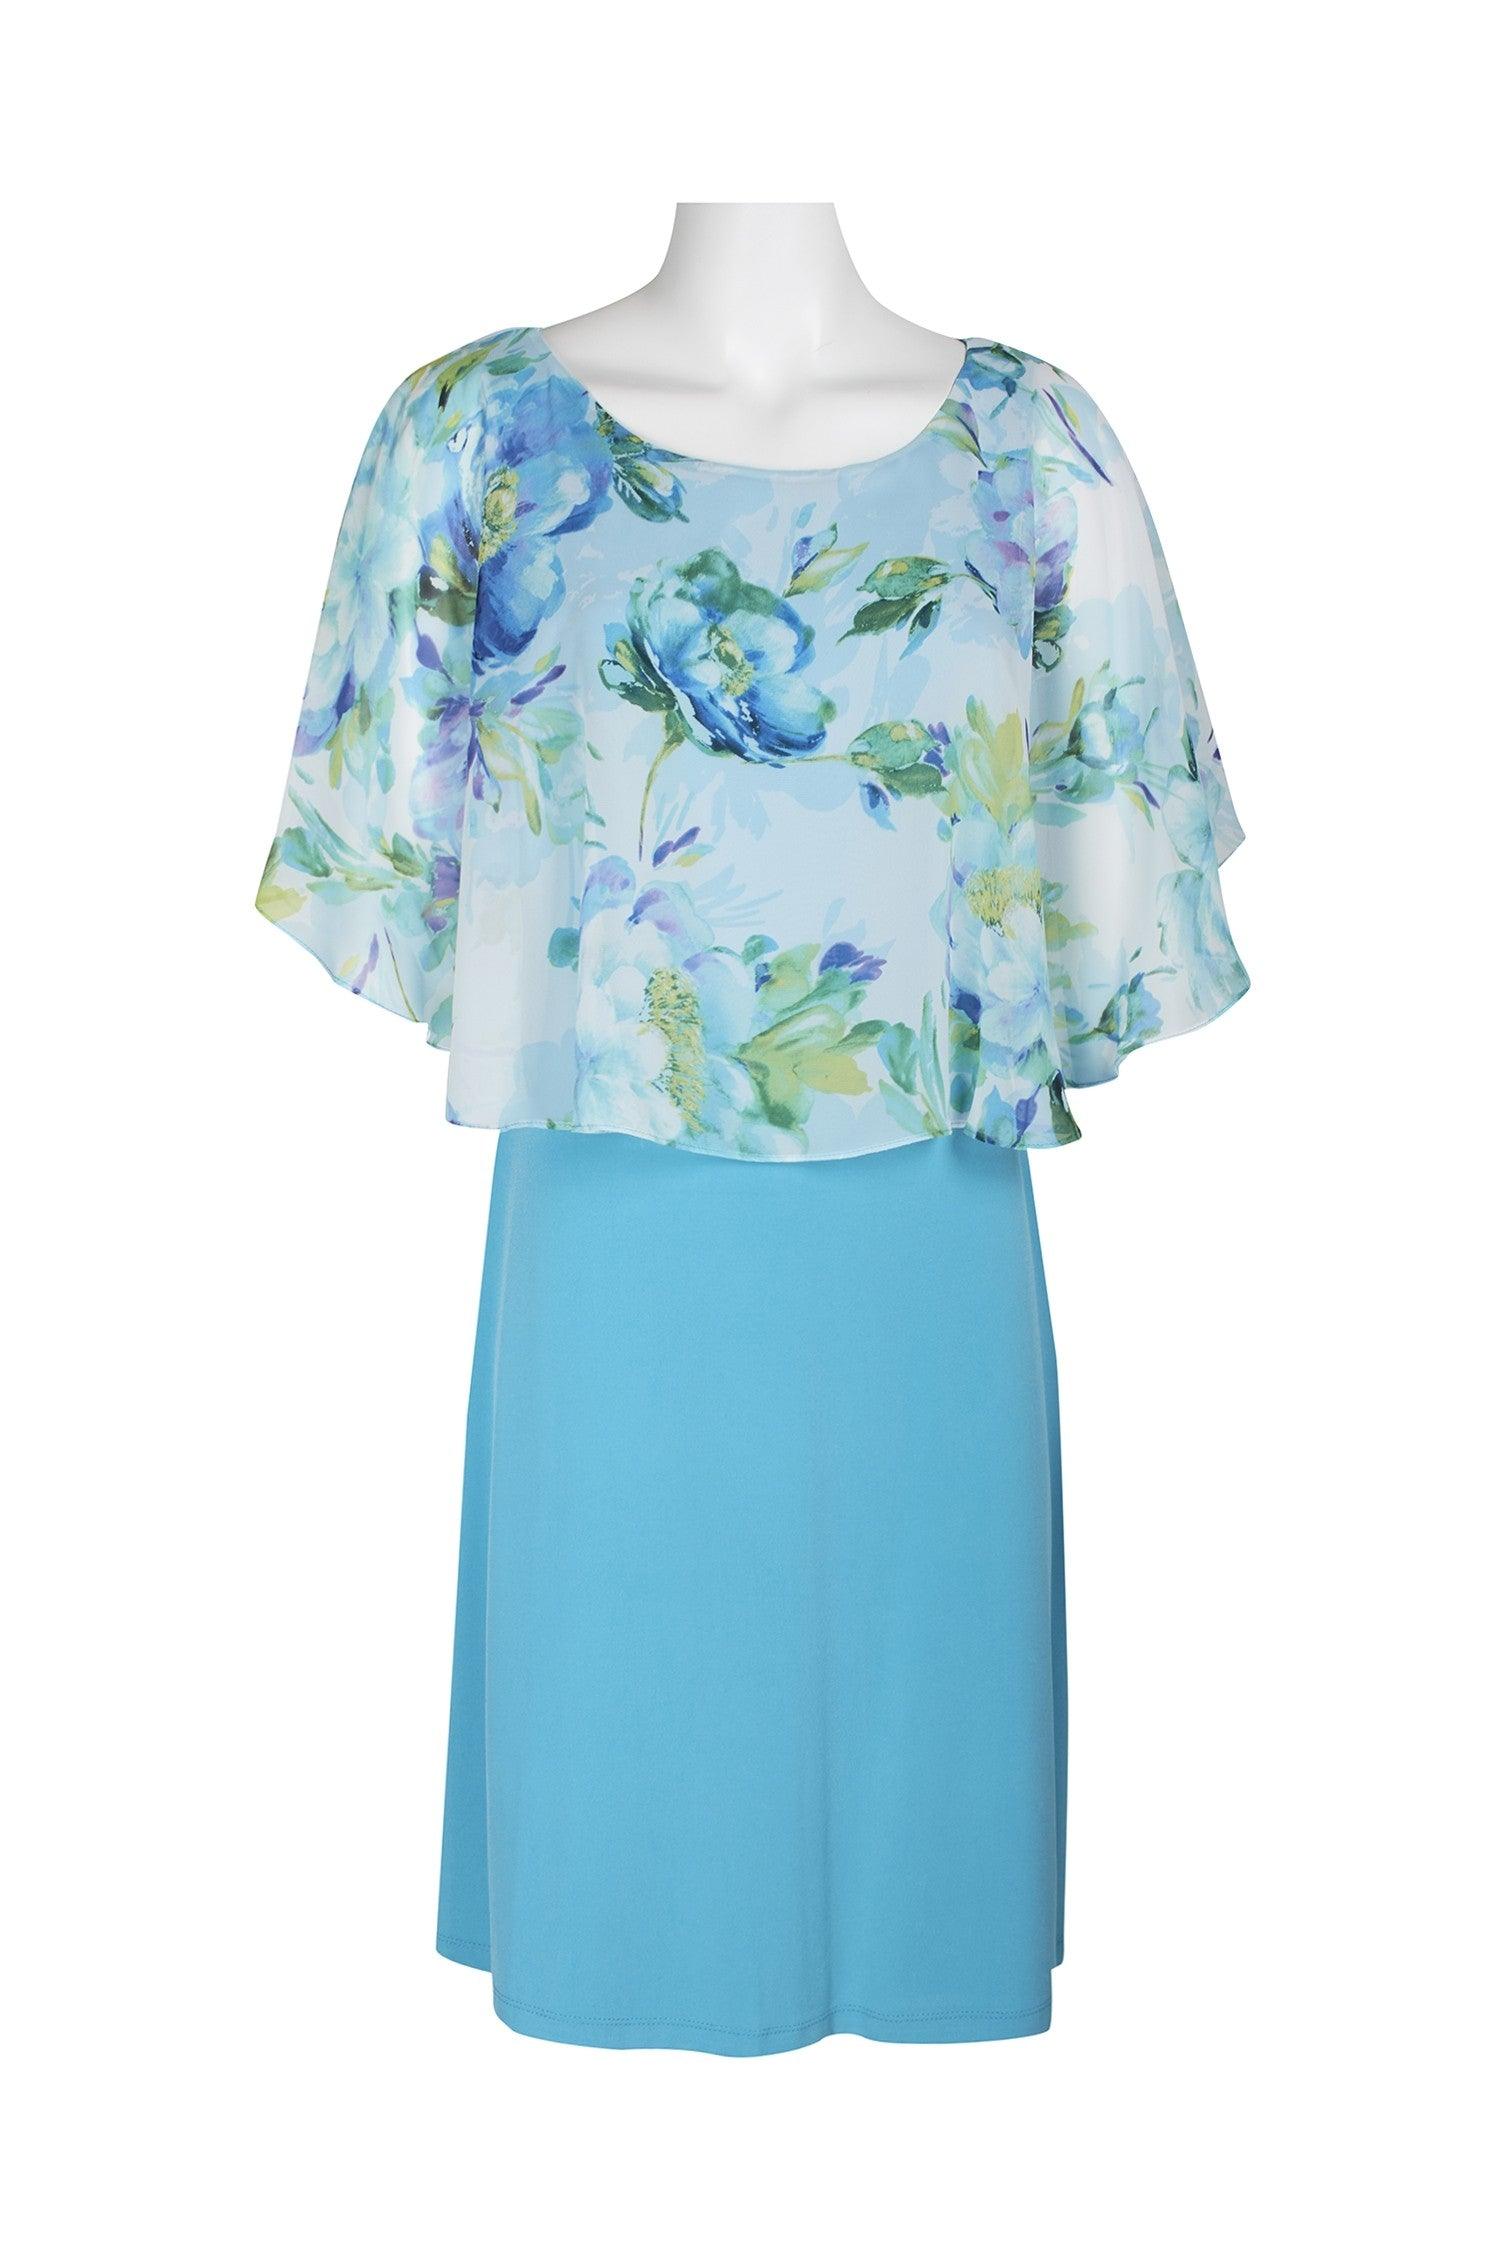 Connected Apparel Short Floral Chiffon Cape Dress - The Dress Outlet